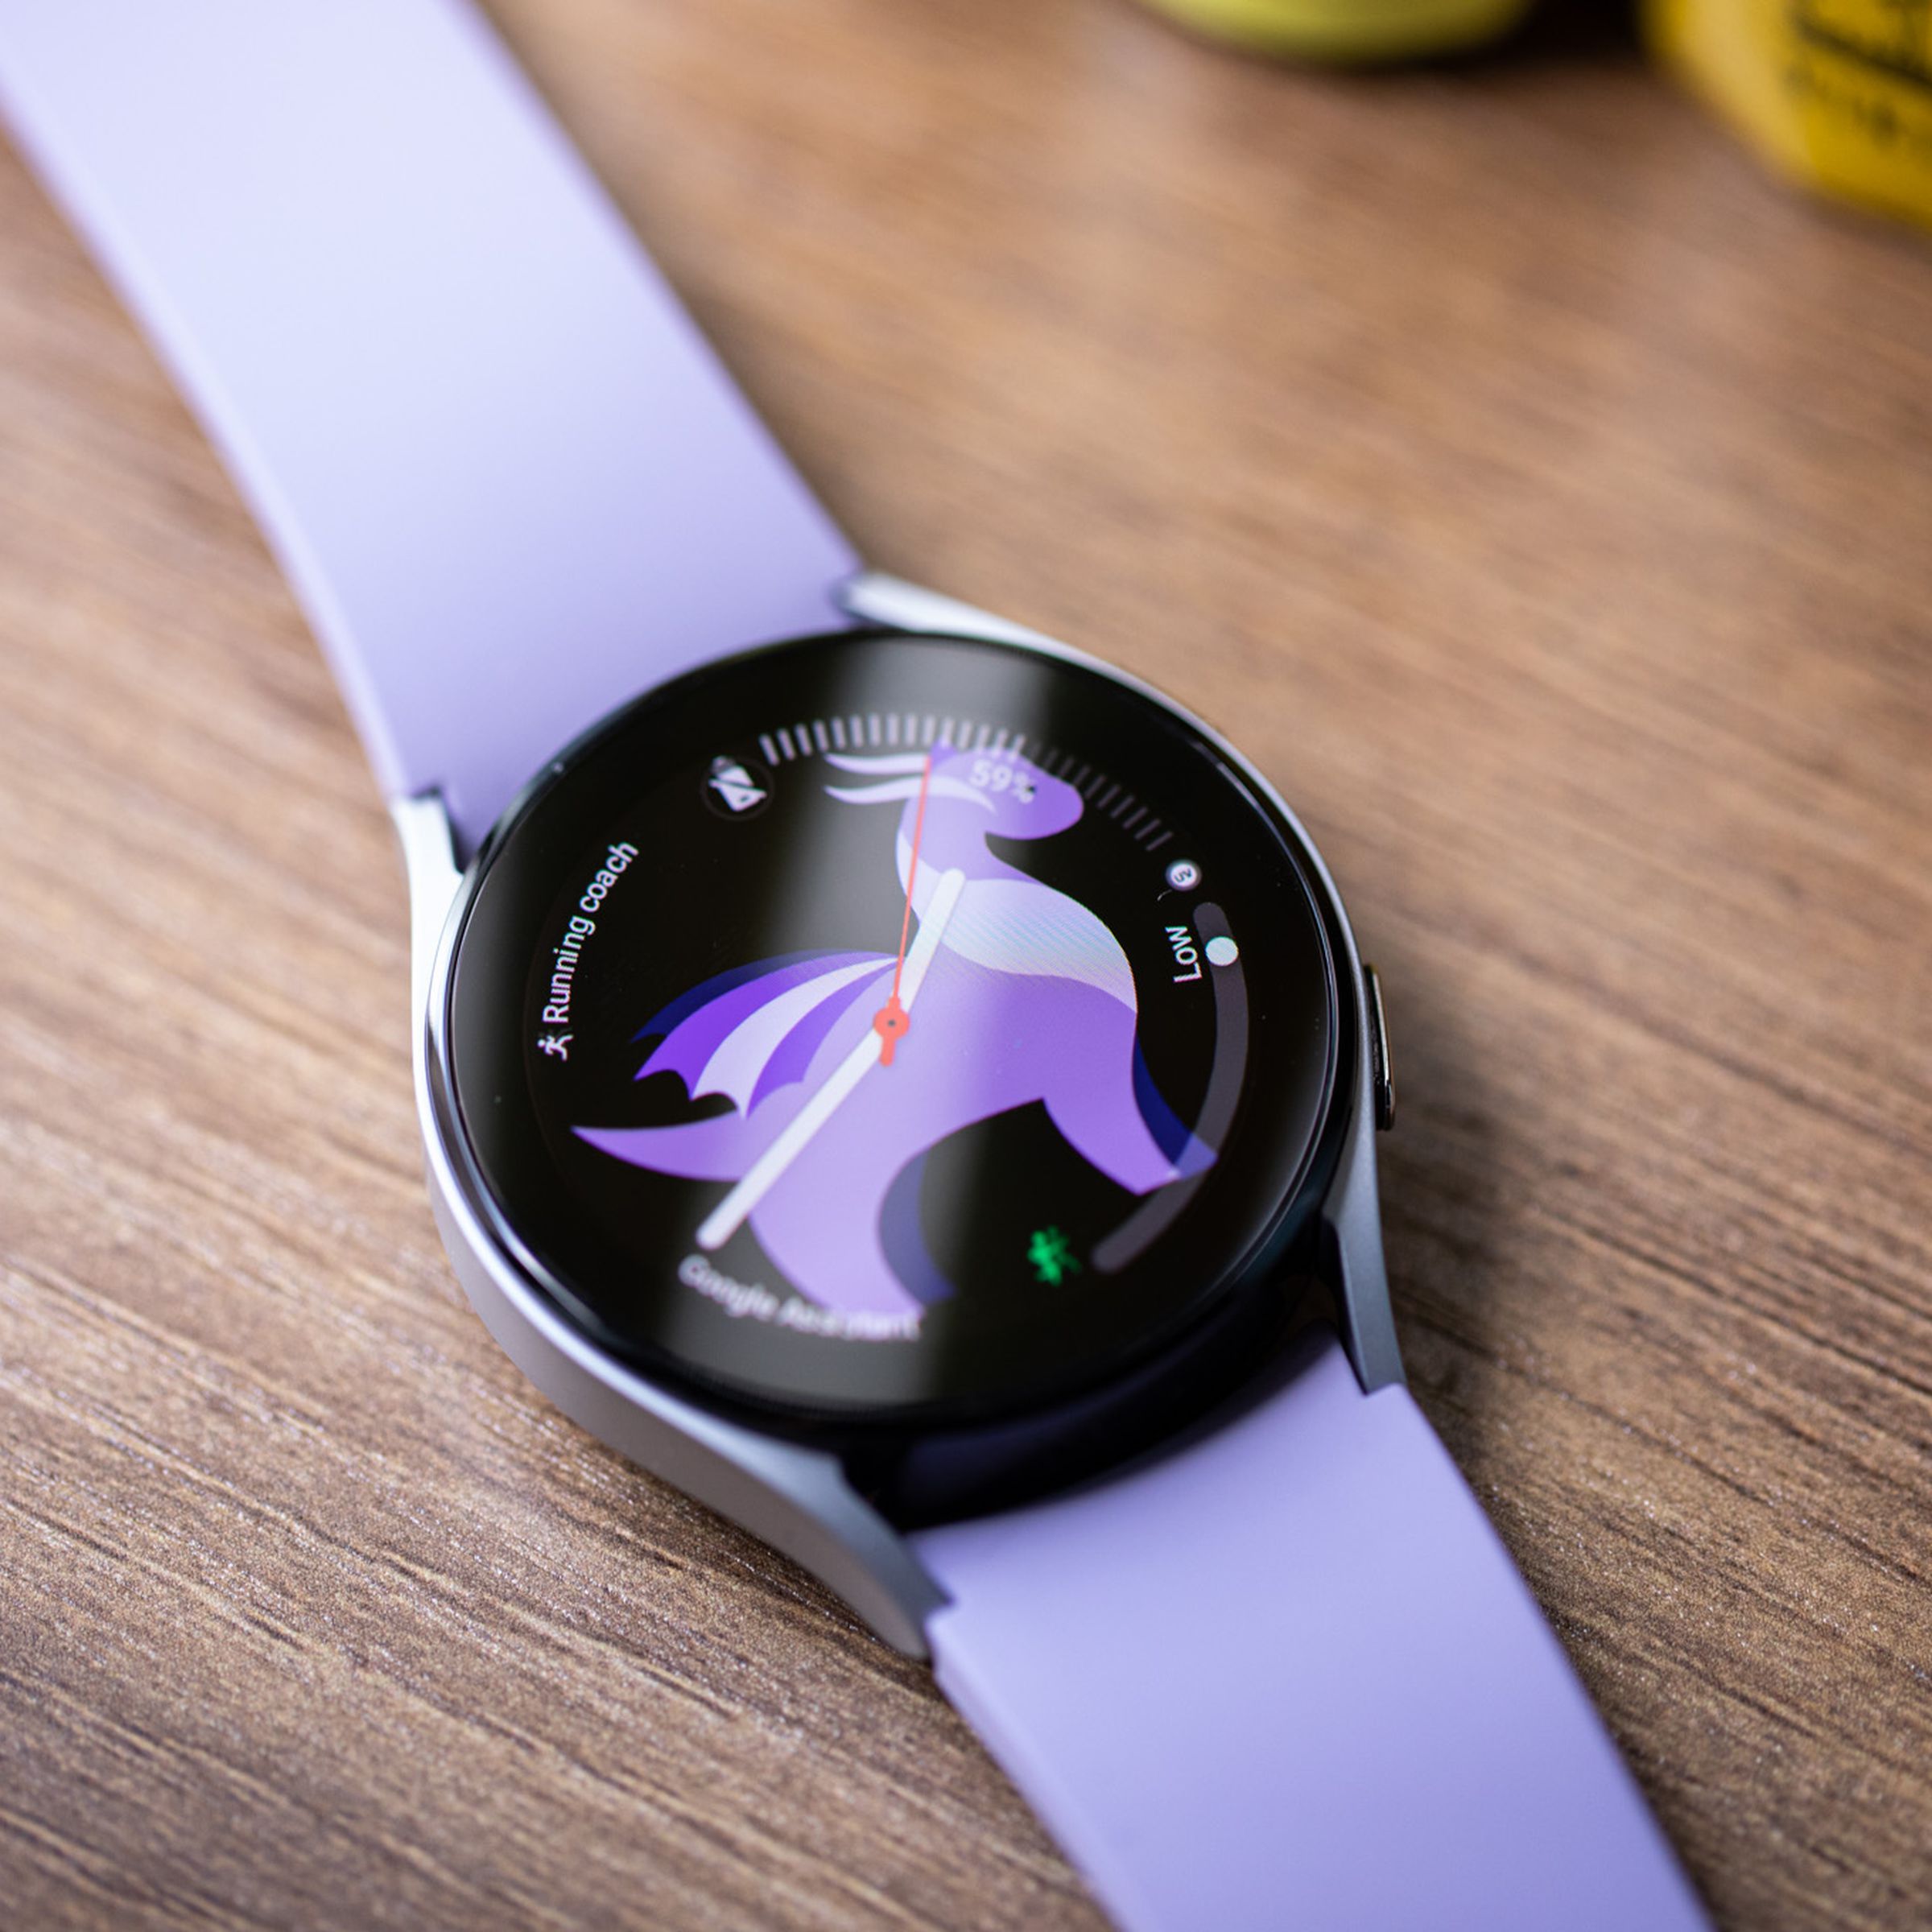 Samsung’s new Purple dragon watch face